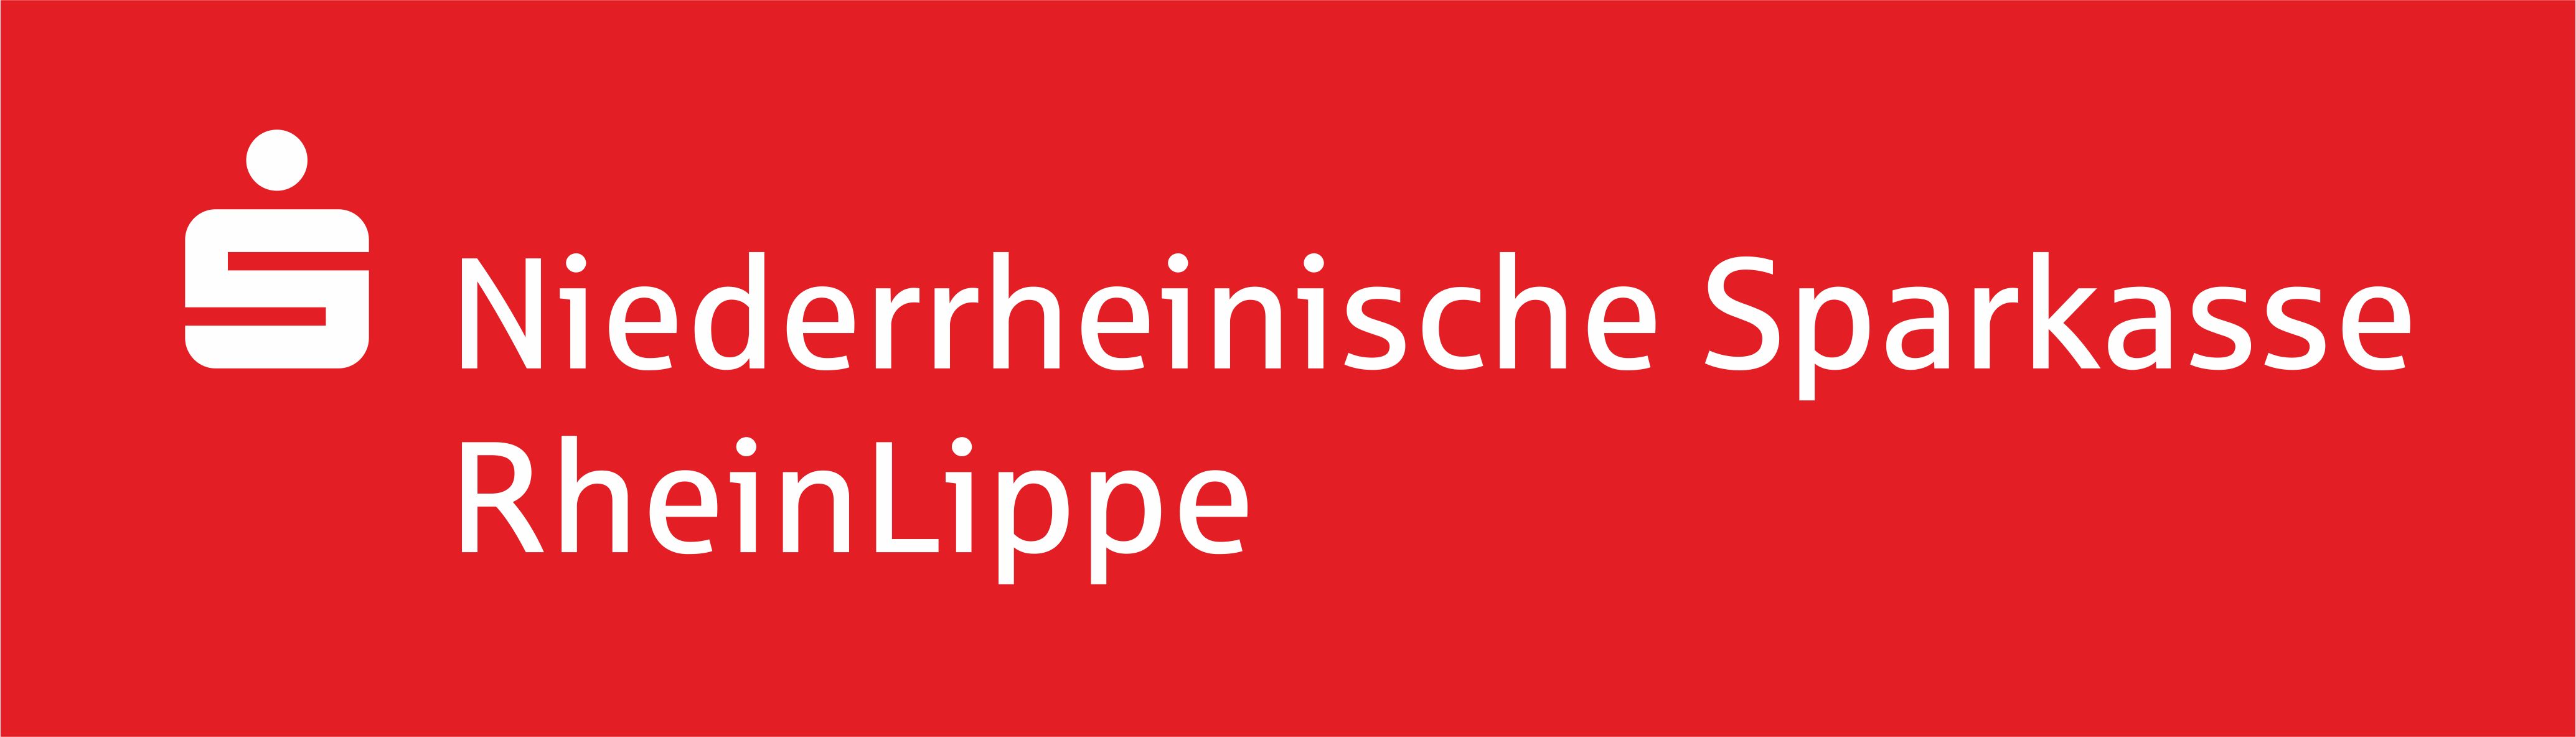 NISPA 20160519 Logo Niederrheinische Sparkasse w a r RGB